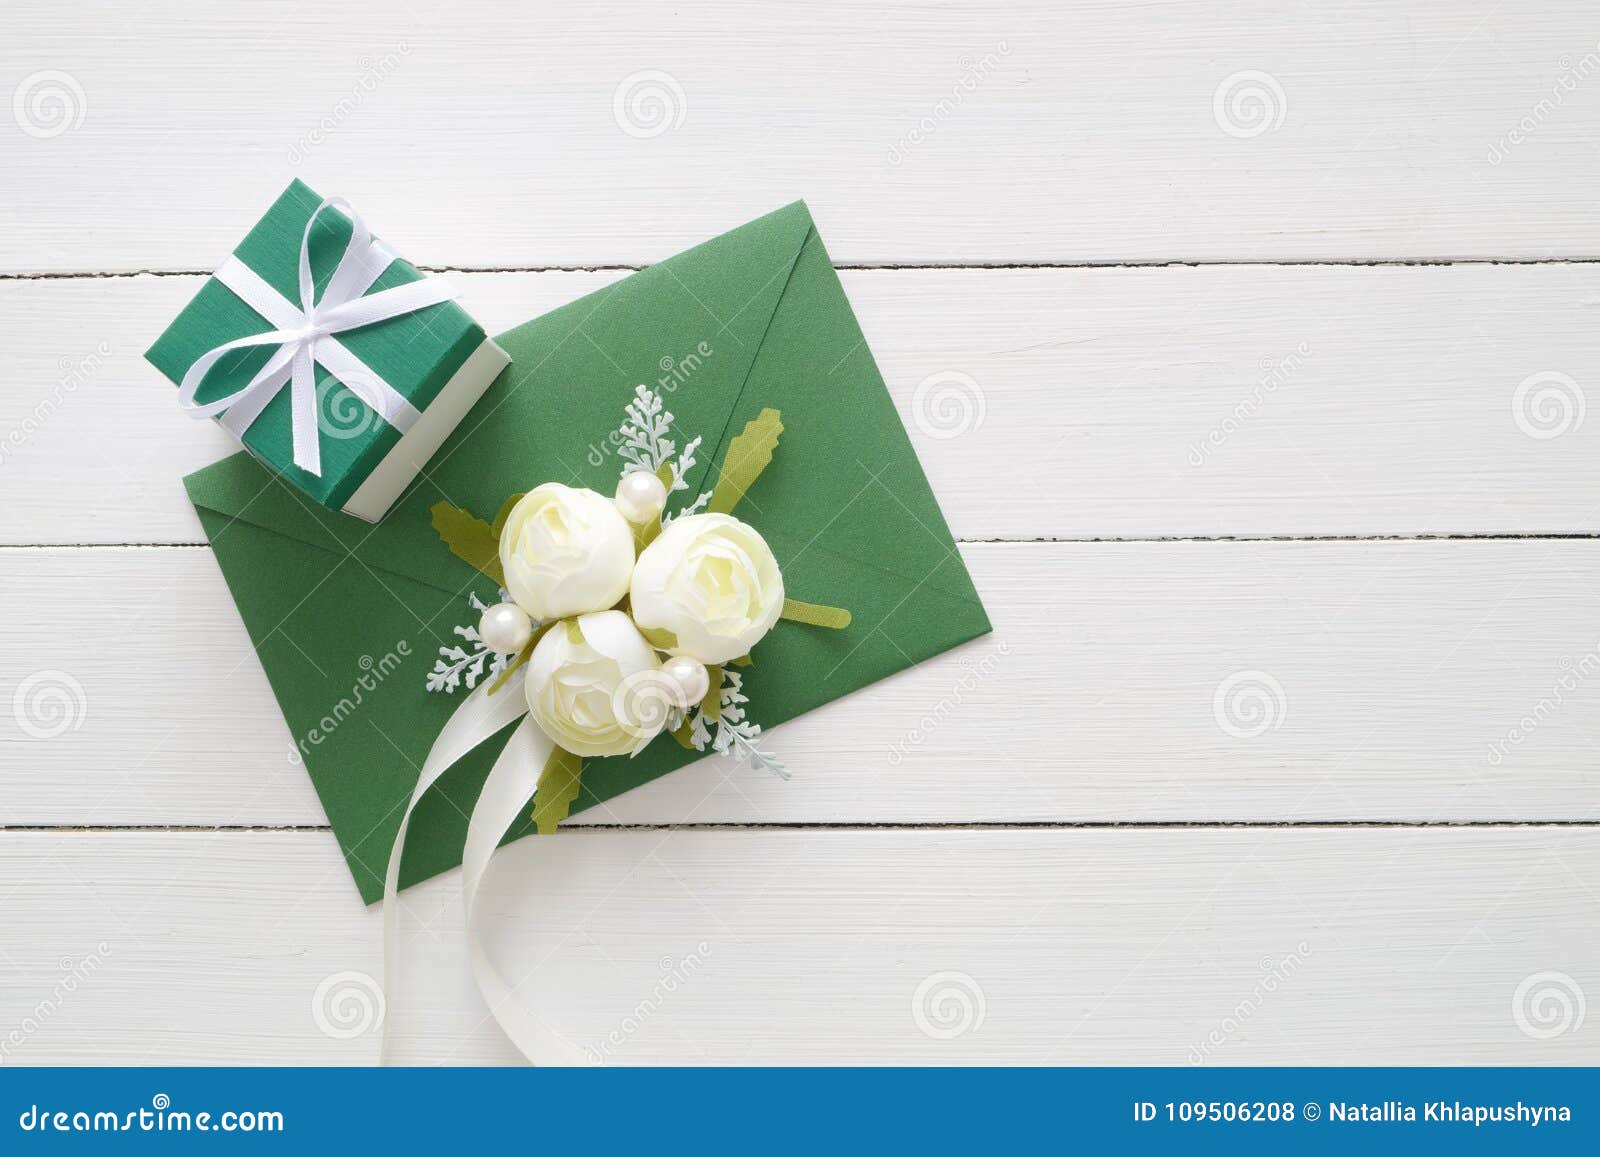 Enveloppes vertes, enveloppe d'invitation verte, enveloppes de mariage  vertes, enveloppe verte sauge, enveloppes de mariage, enveloppe  d'invitation, paquet de 25 -  France